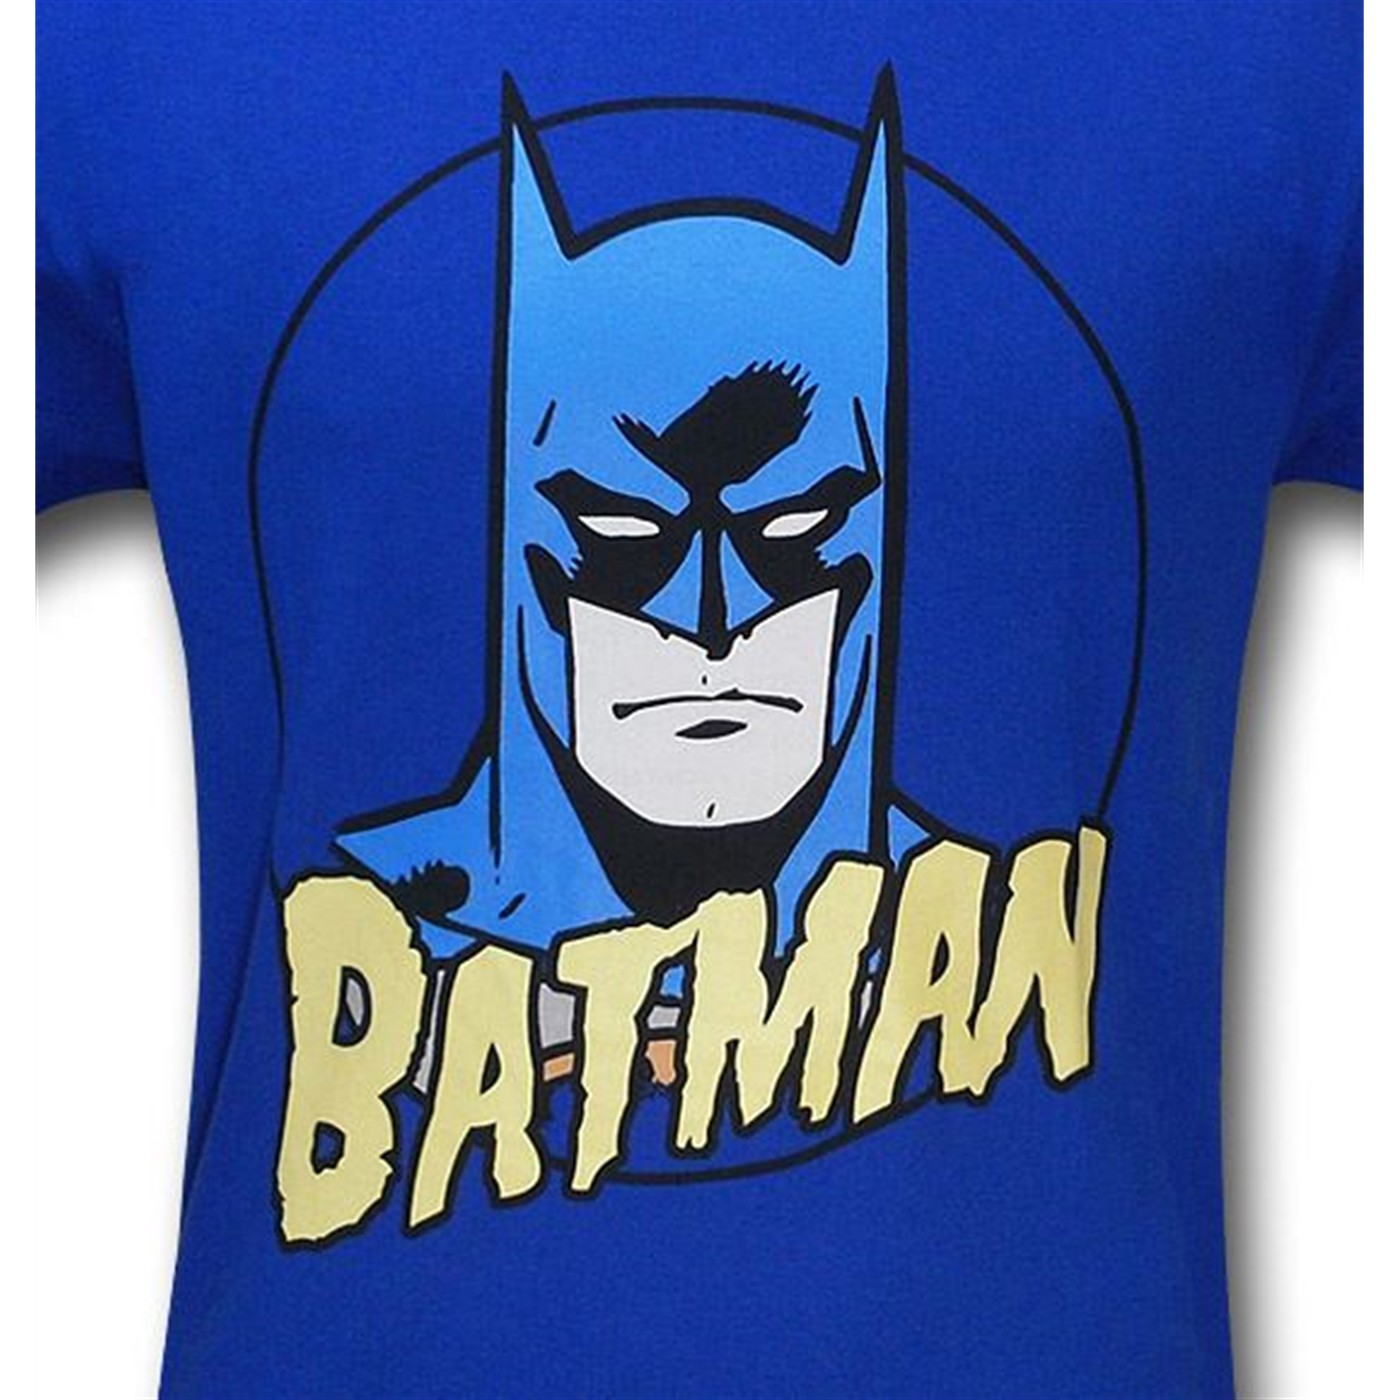 Batman Stern Visage Kids T-Shirt